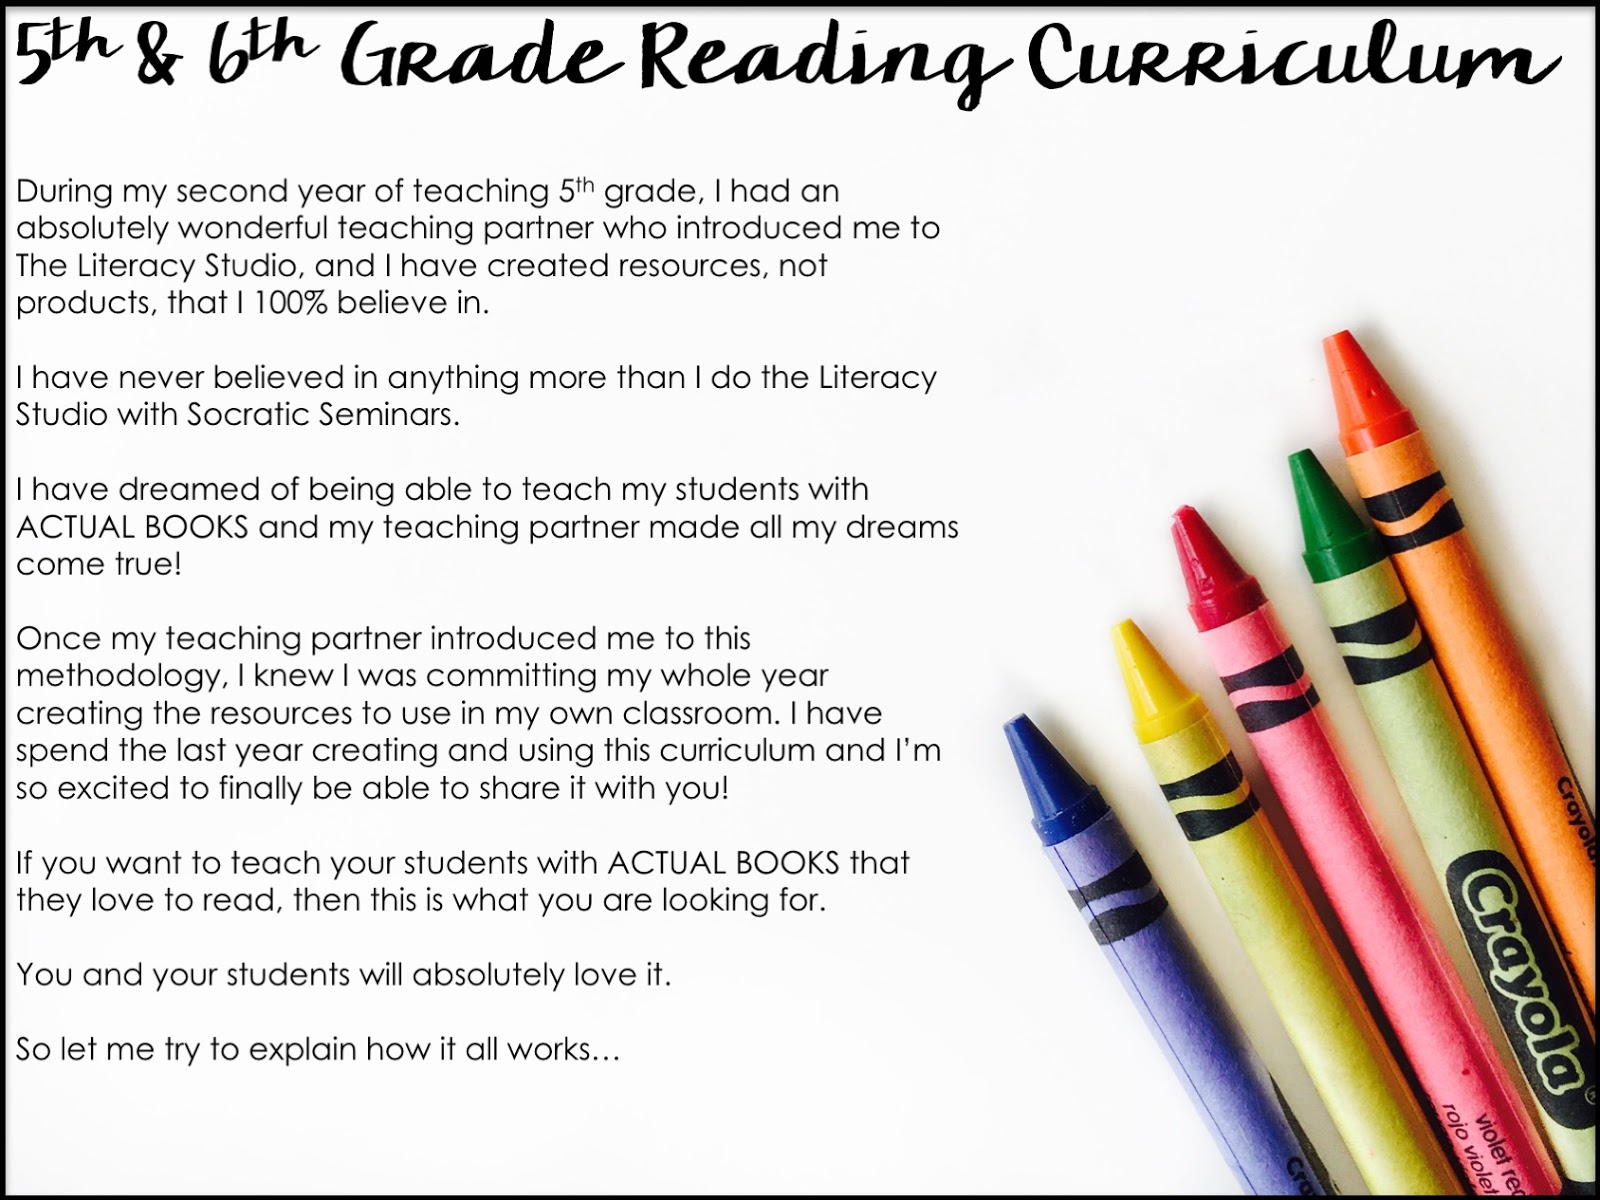 The Art of teaching reading".